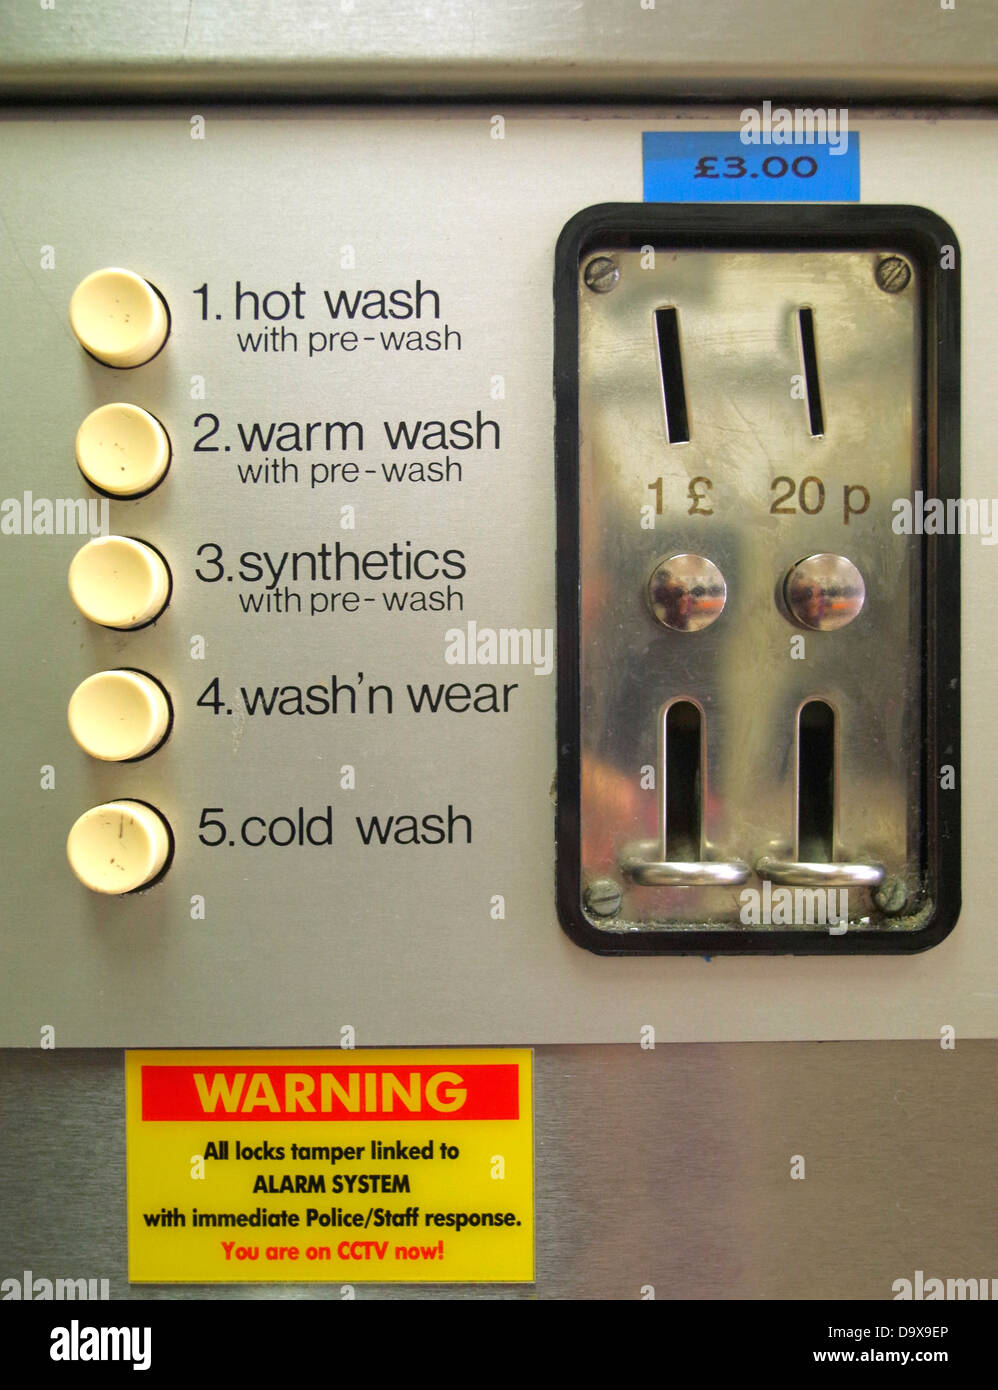 Coin slot on Laundrette washing machine Stock Photo